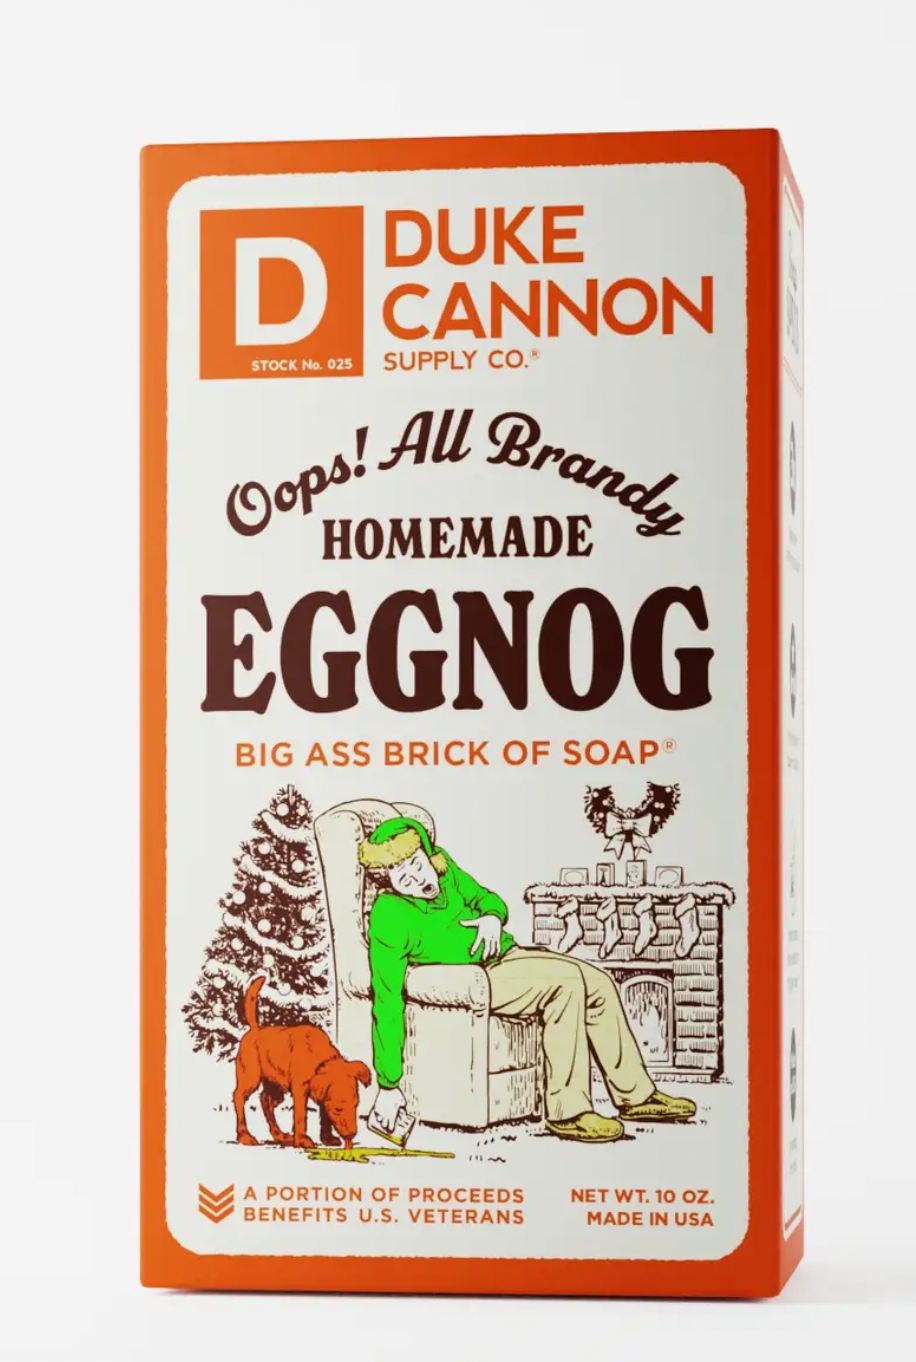 Duke Cannon Homemade Eggnog Bar Soap